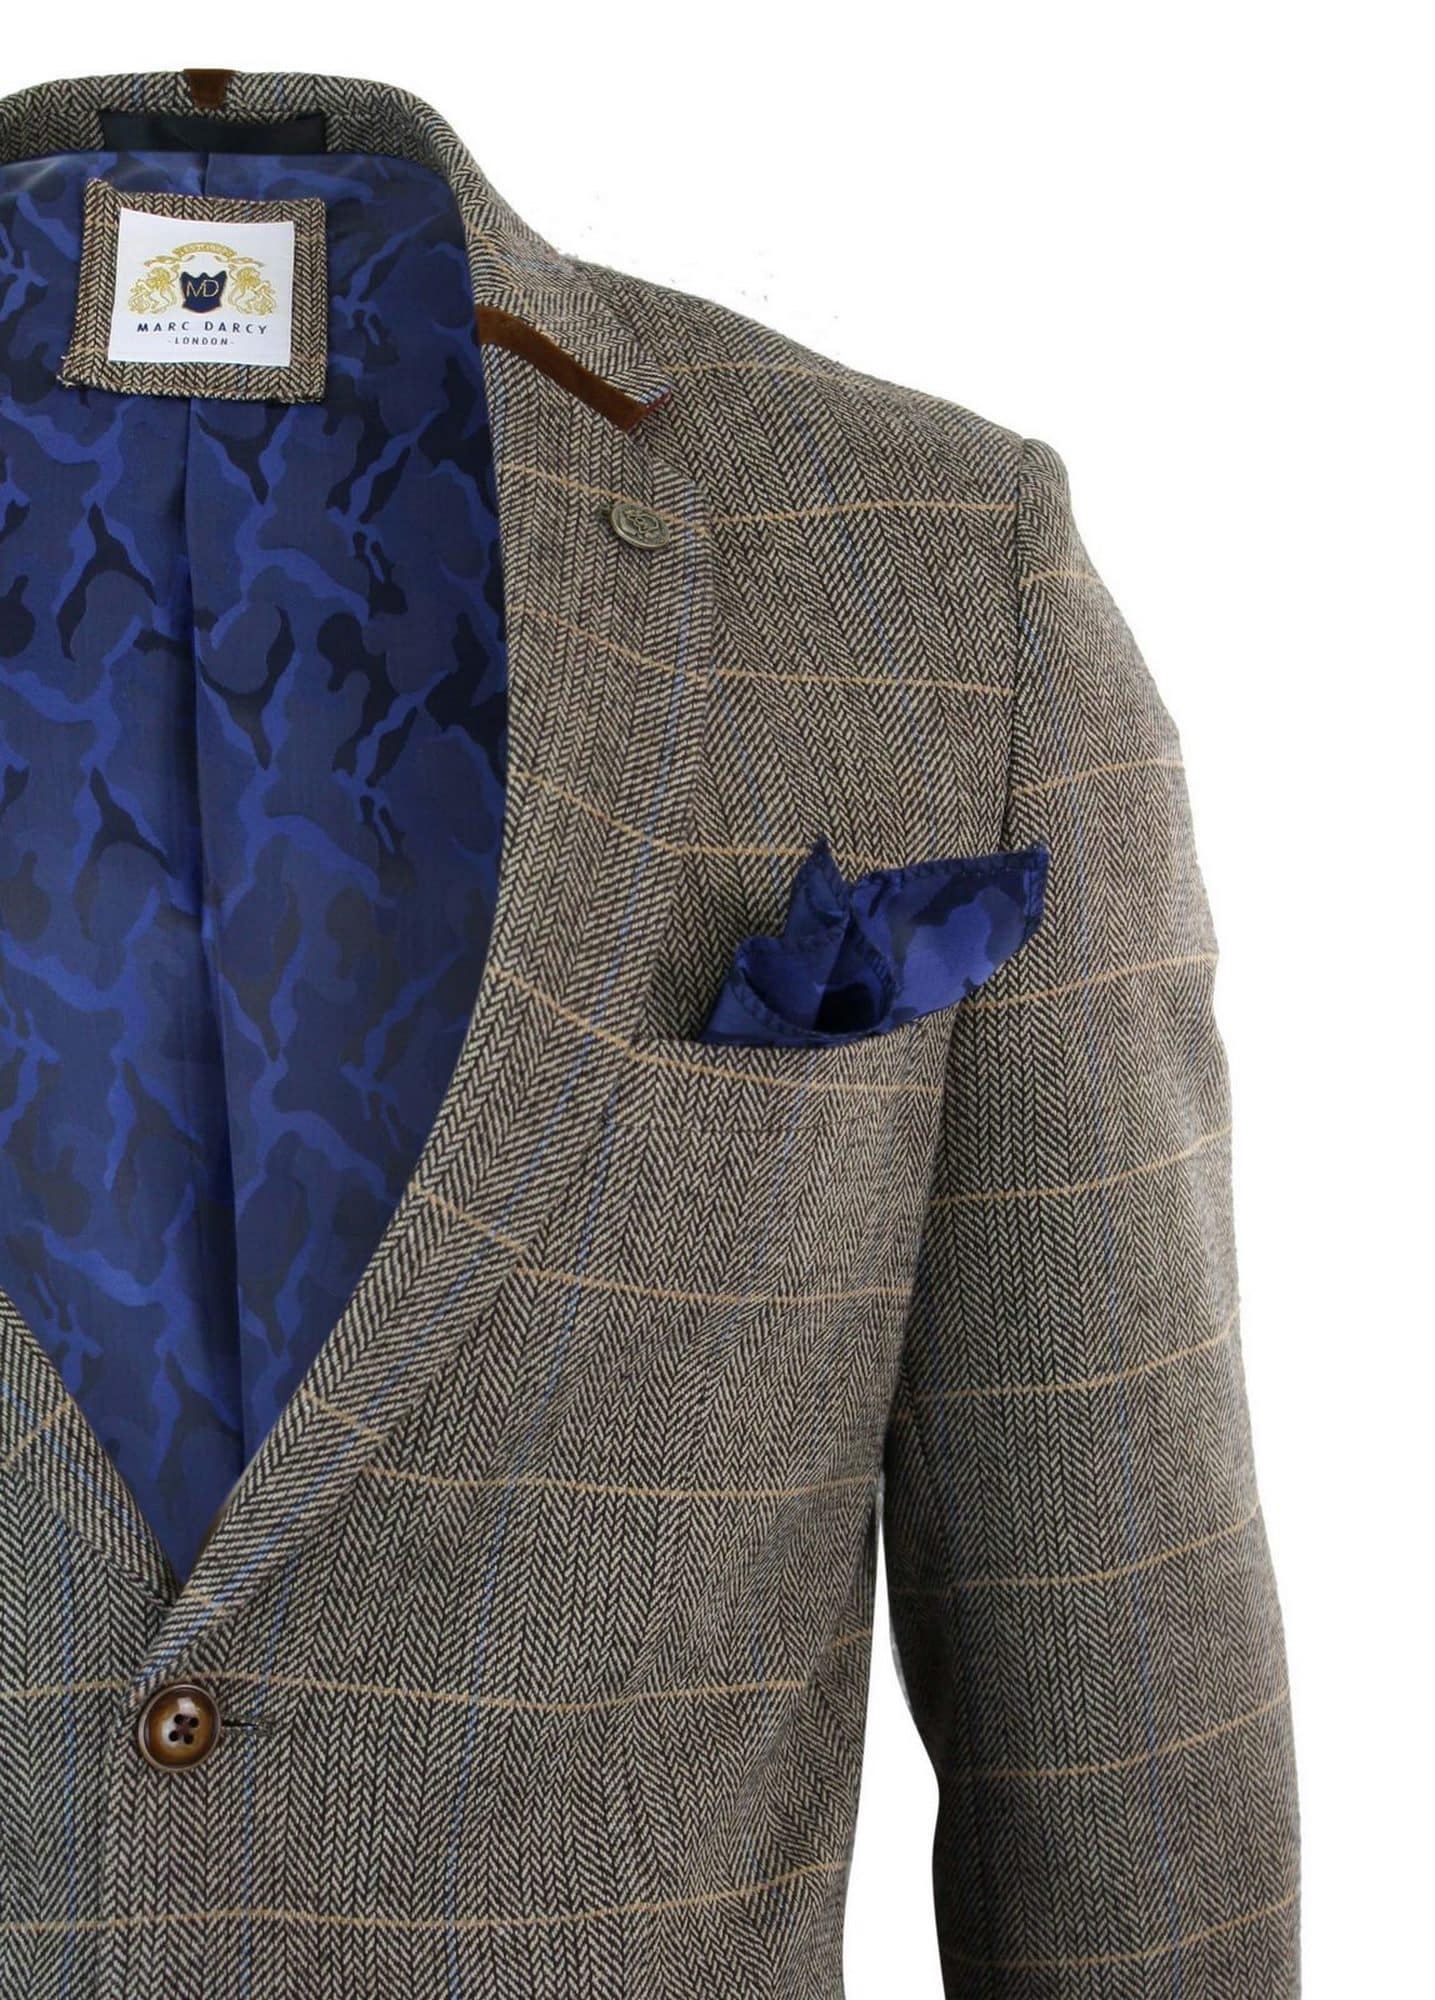 Kleding Gender-neutrale kleding volwassenen Blazers Heren visgraat tweed marc darcy tan bruin slim fit 2 button blazer check jasje 